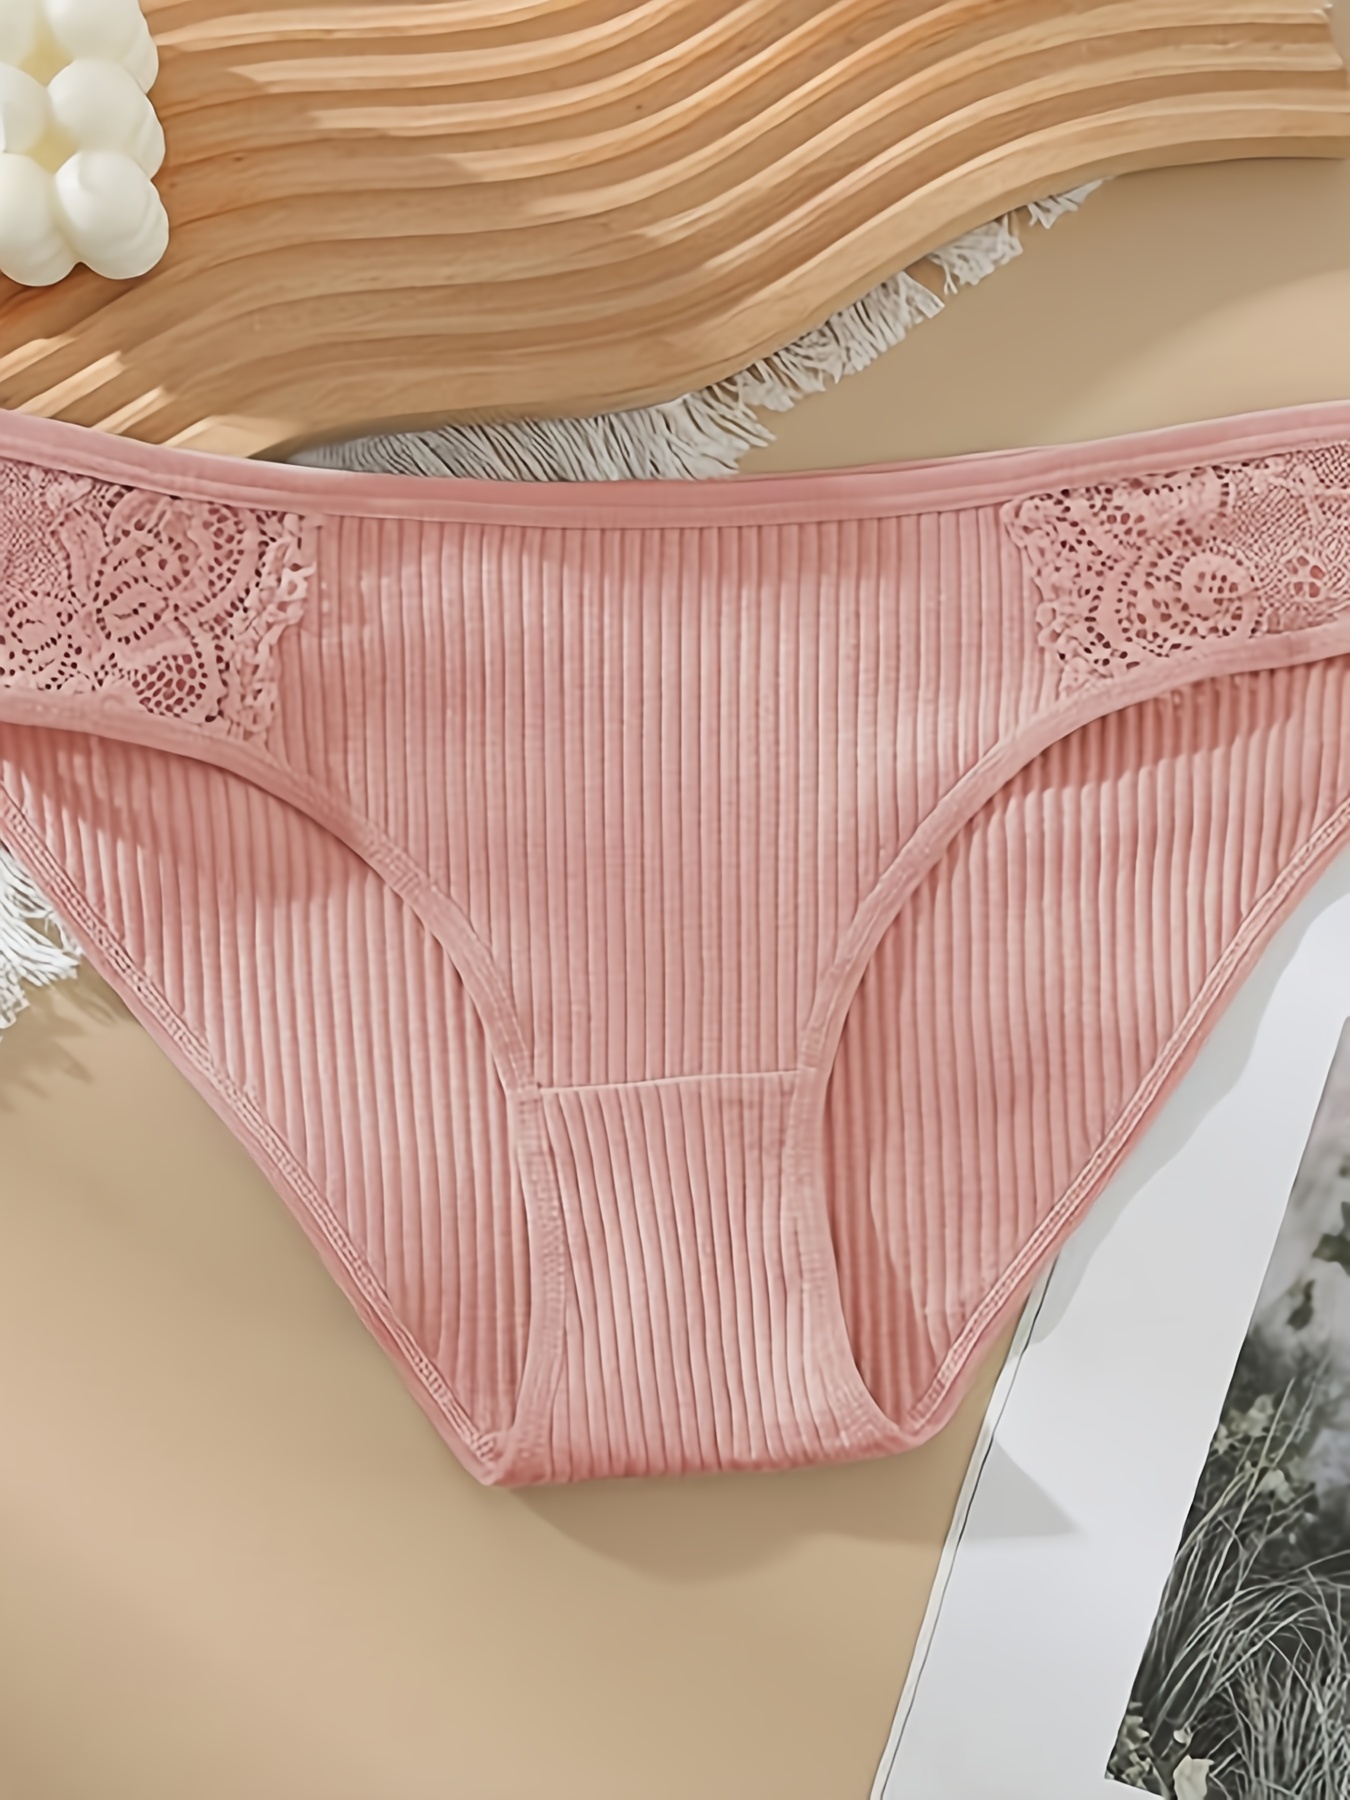 Women Briefs Underwear Seamless Thongs Cotton Panties Fitness Lingerie G- string